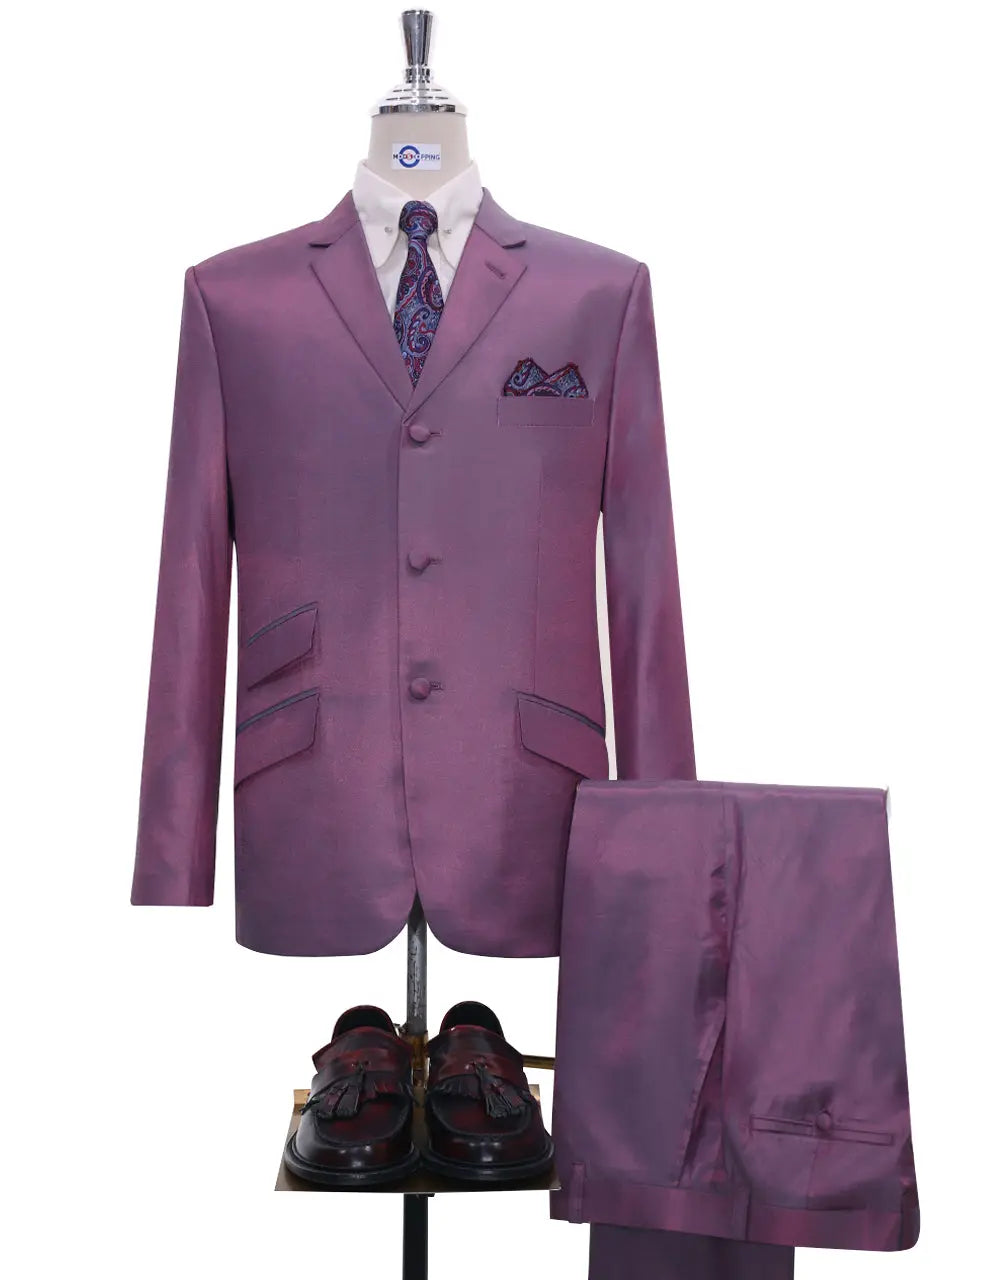 Two Tone Suits | Vintage Style Mod Fashion Two Tone Suit – Modshopping ...